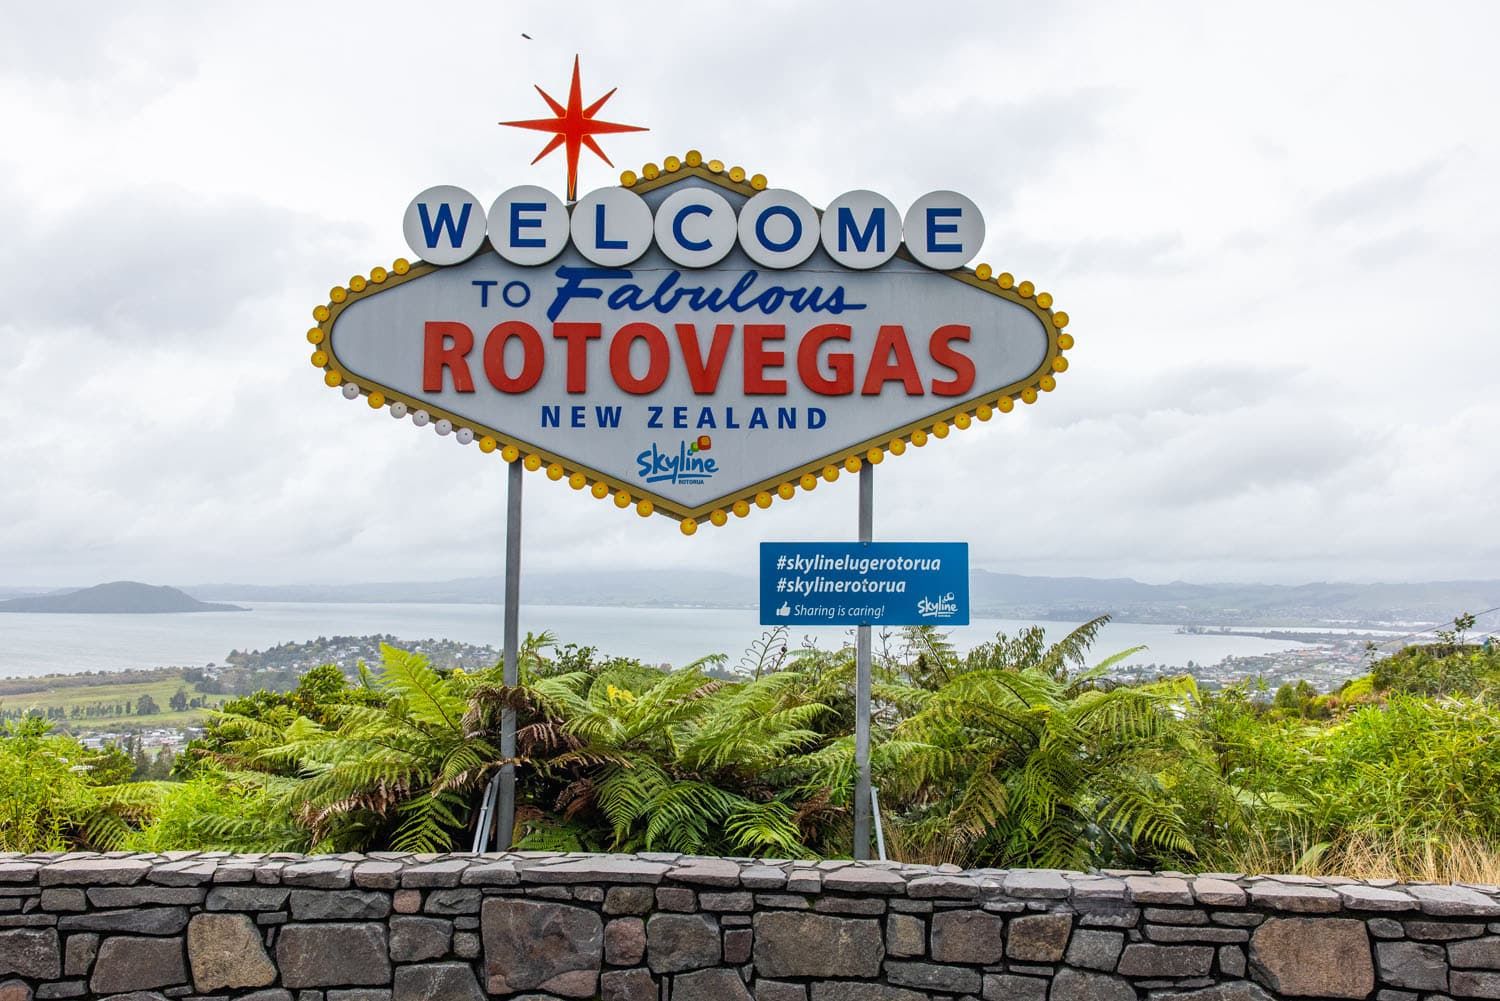 Rotovegas New Zealand